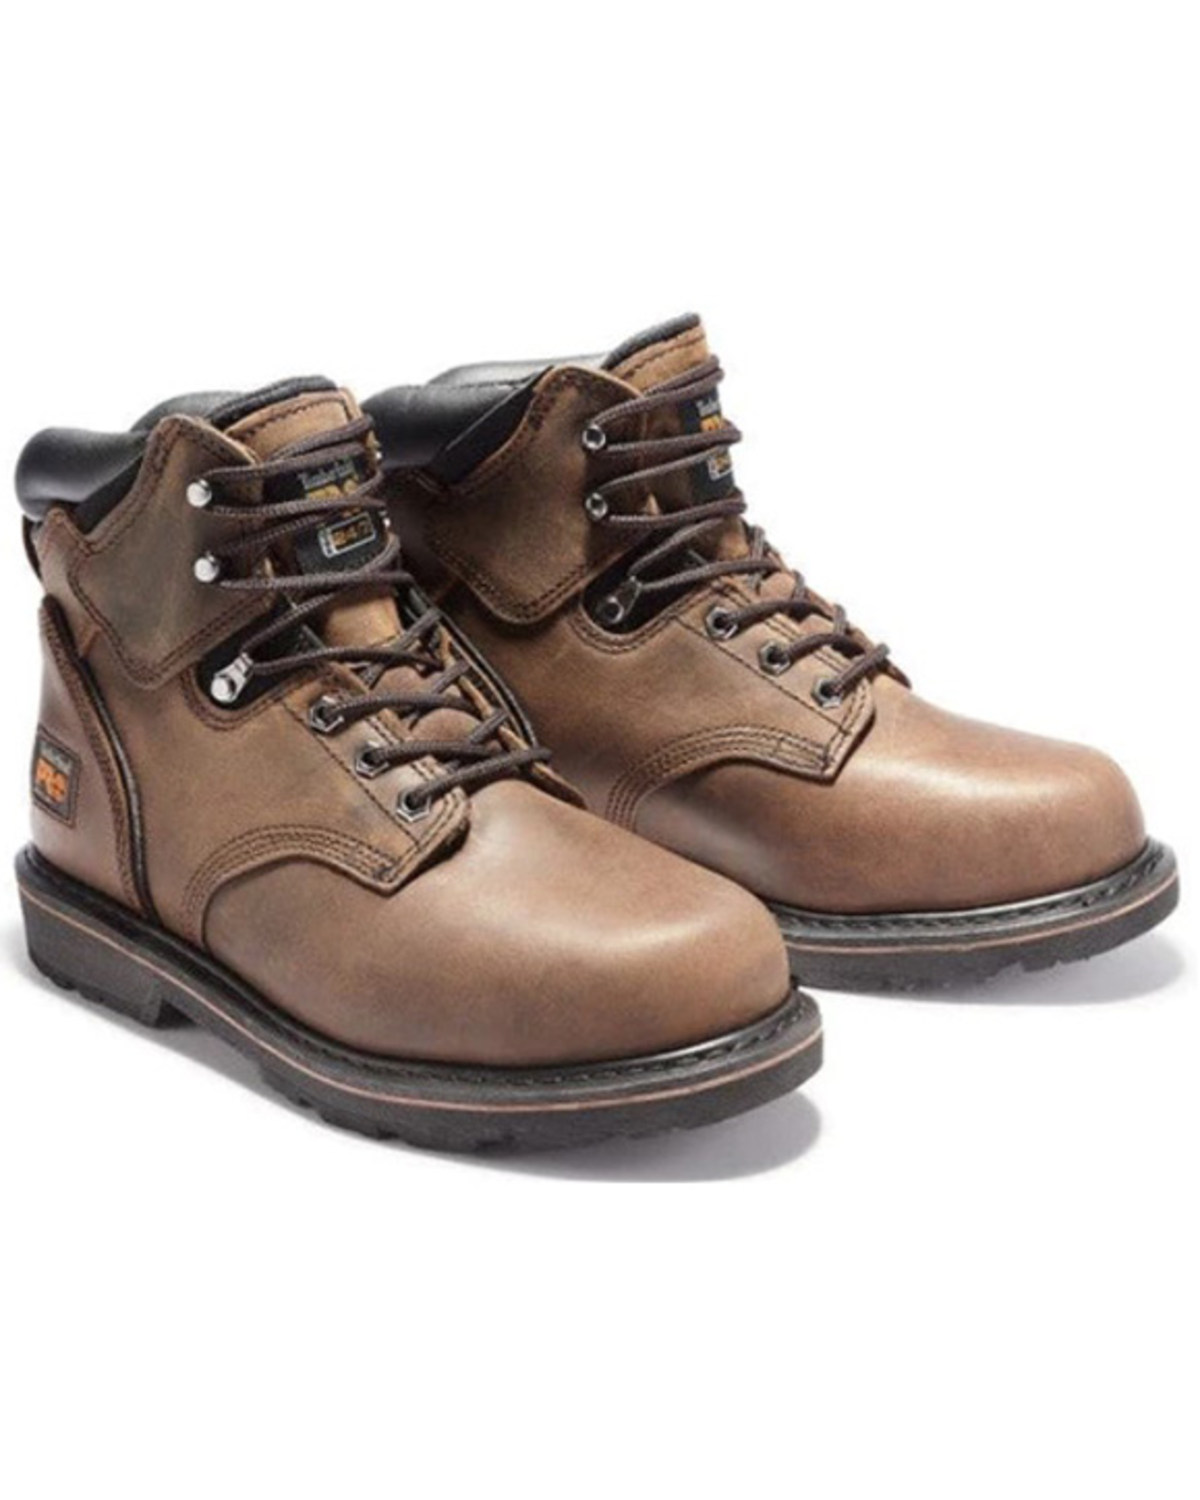 Timberland Men's 6" Pit Boss Slip Resistant Work Boots - Steel Toe